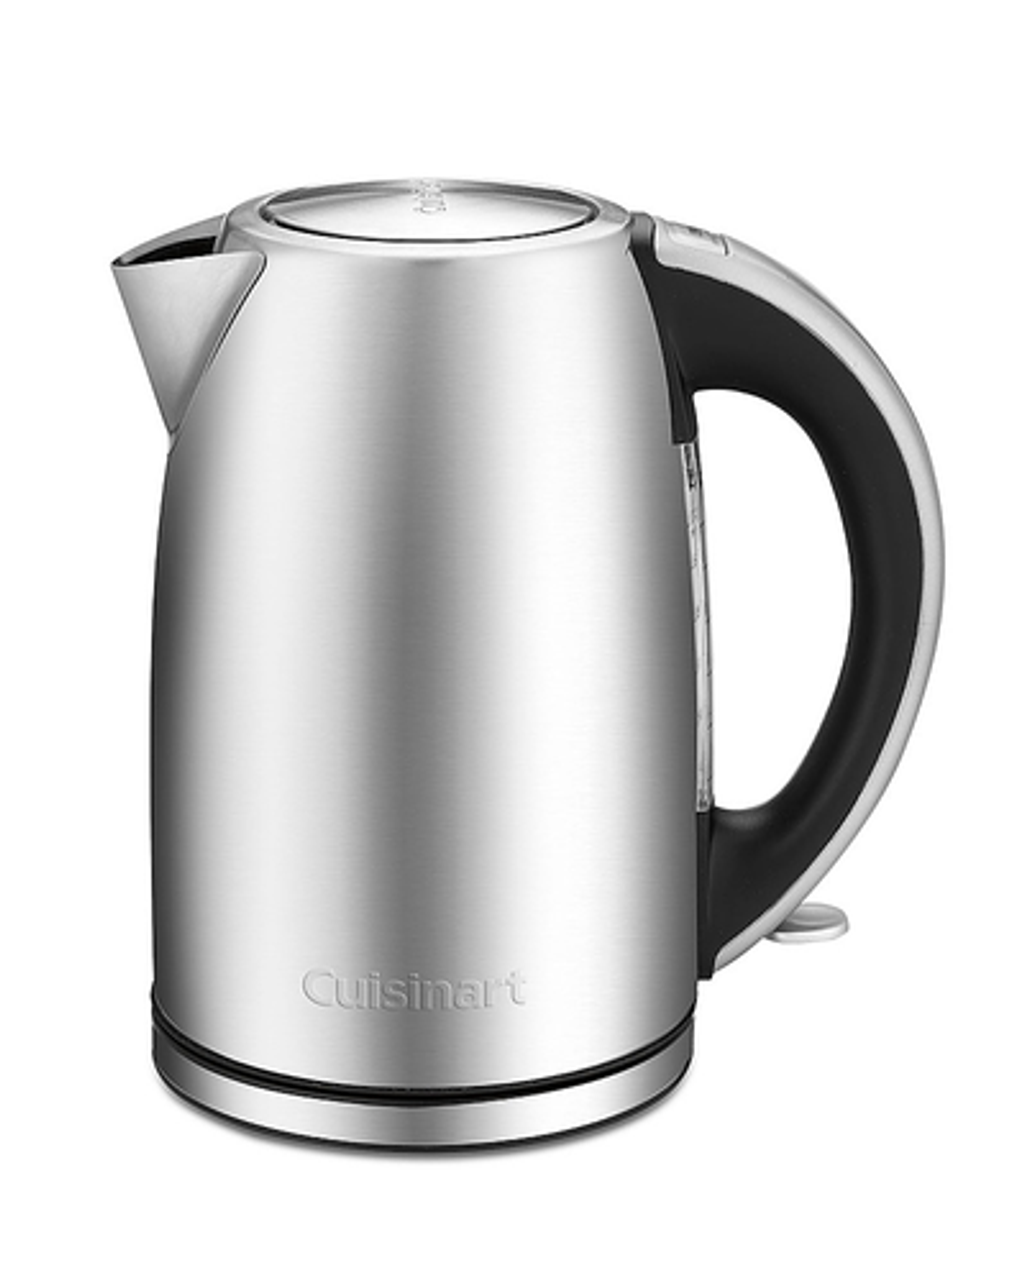 Cuisinart - Electric Cordless Tea Kettle - Silver